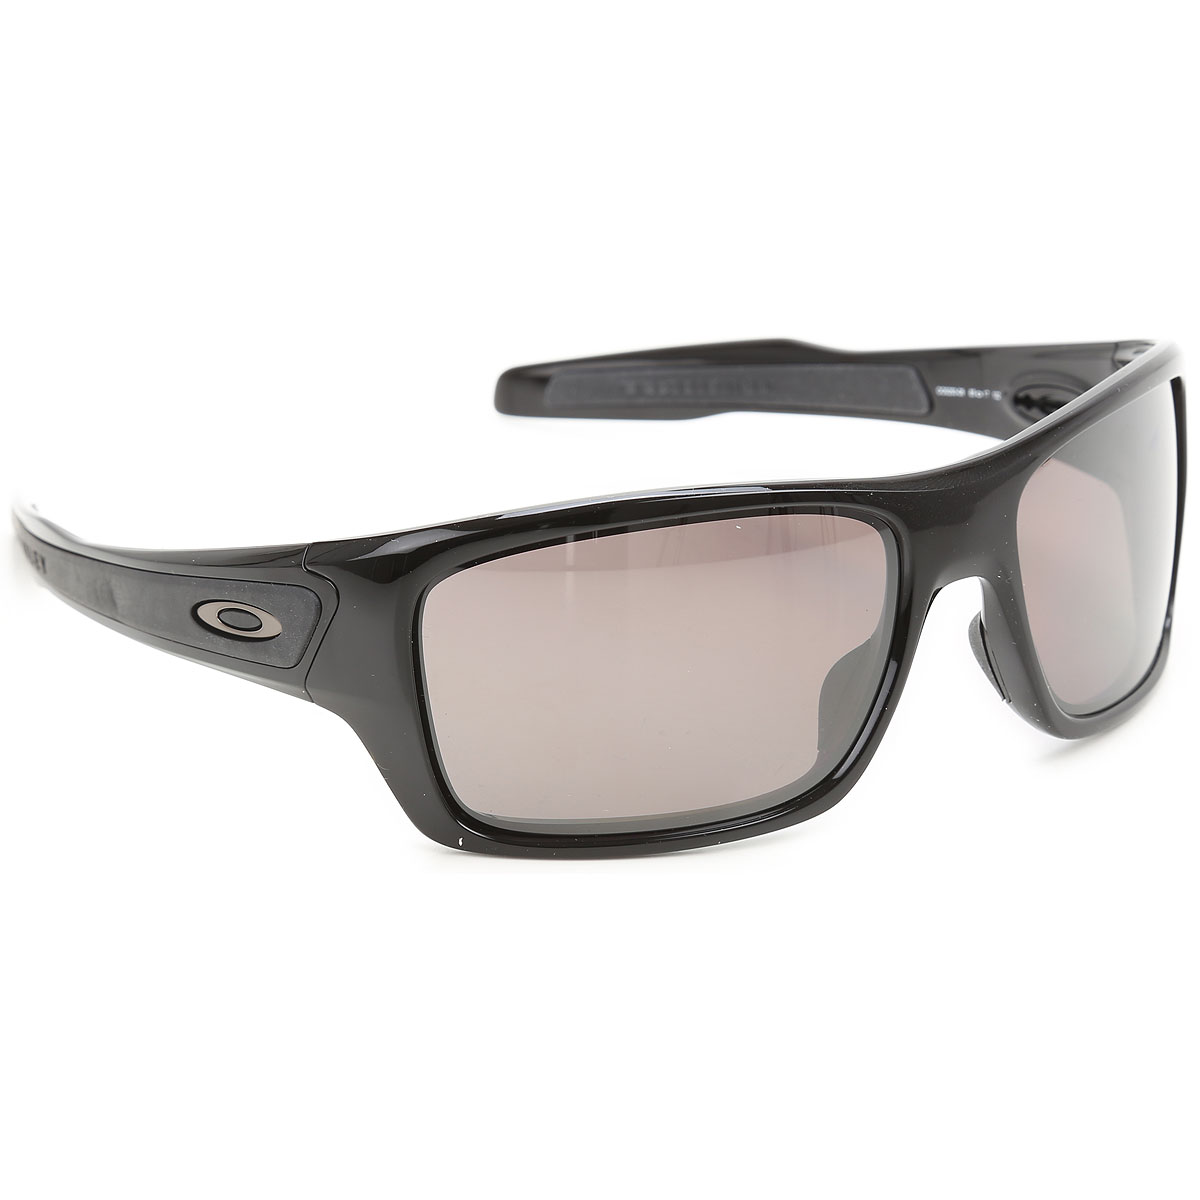 Sunglasses Oakley, Style code: turbine-oo9263-06